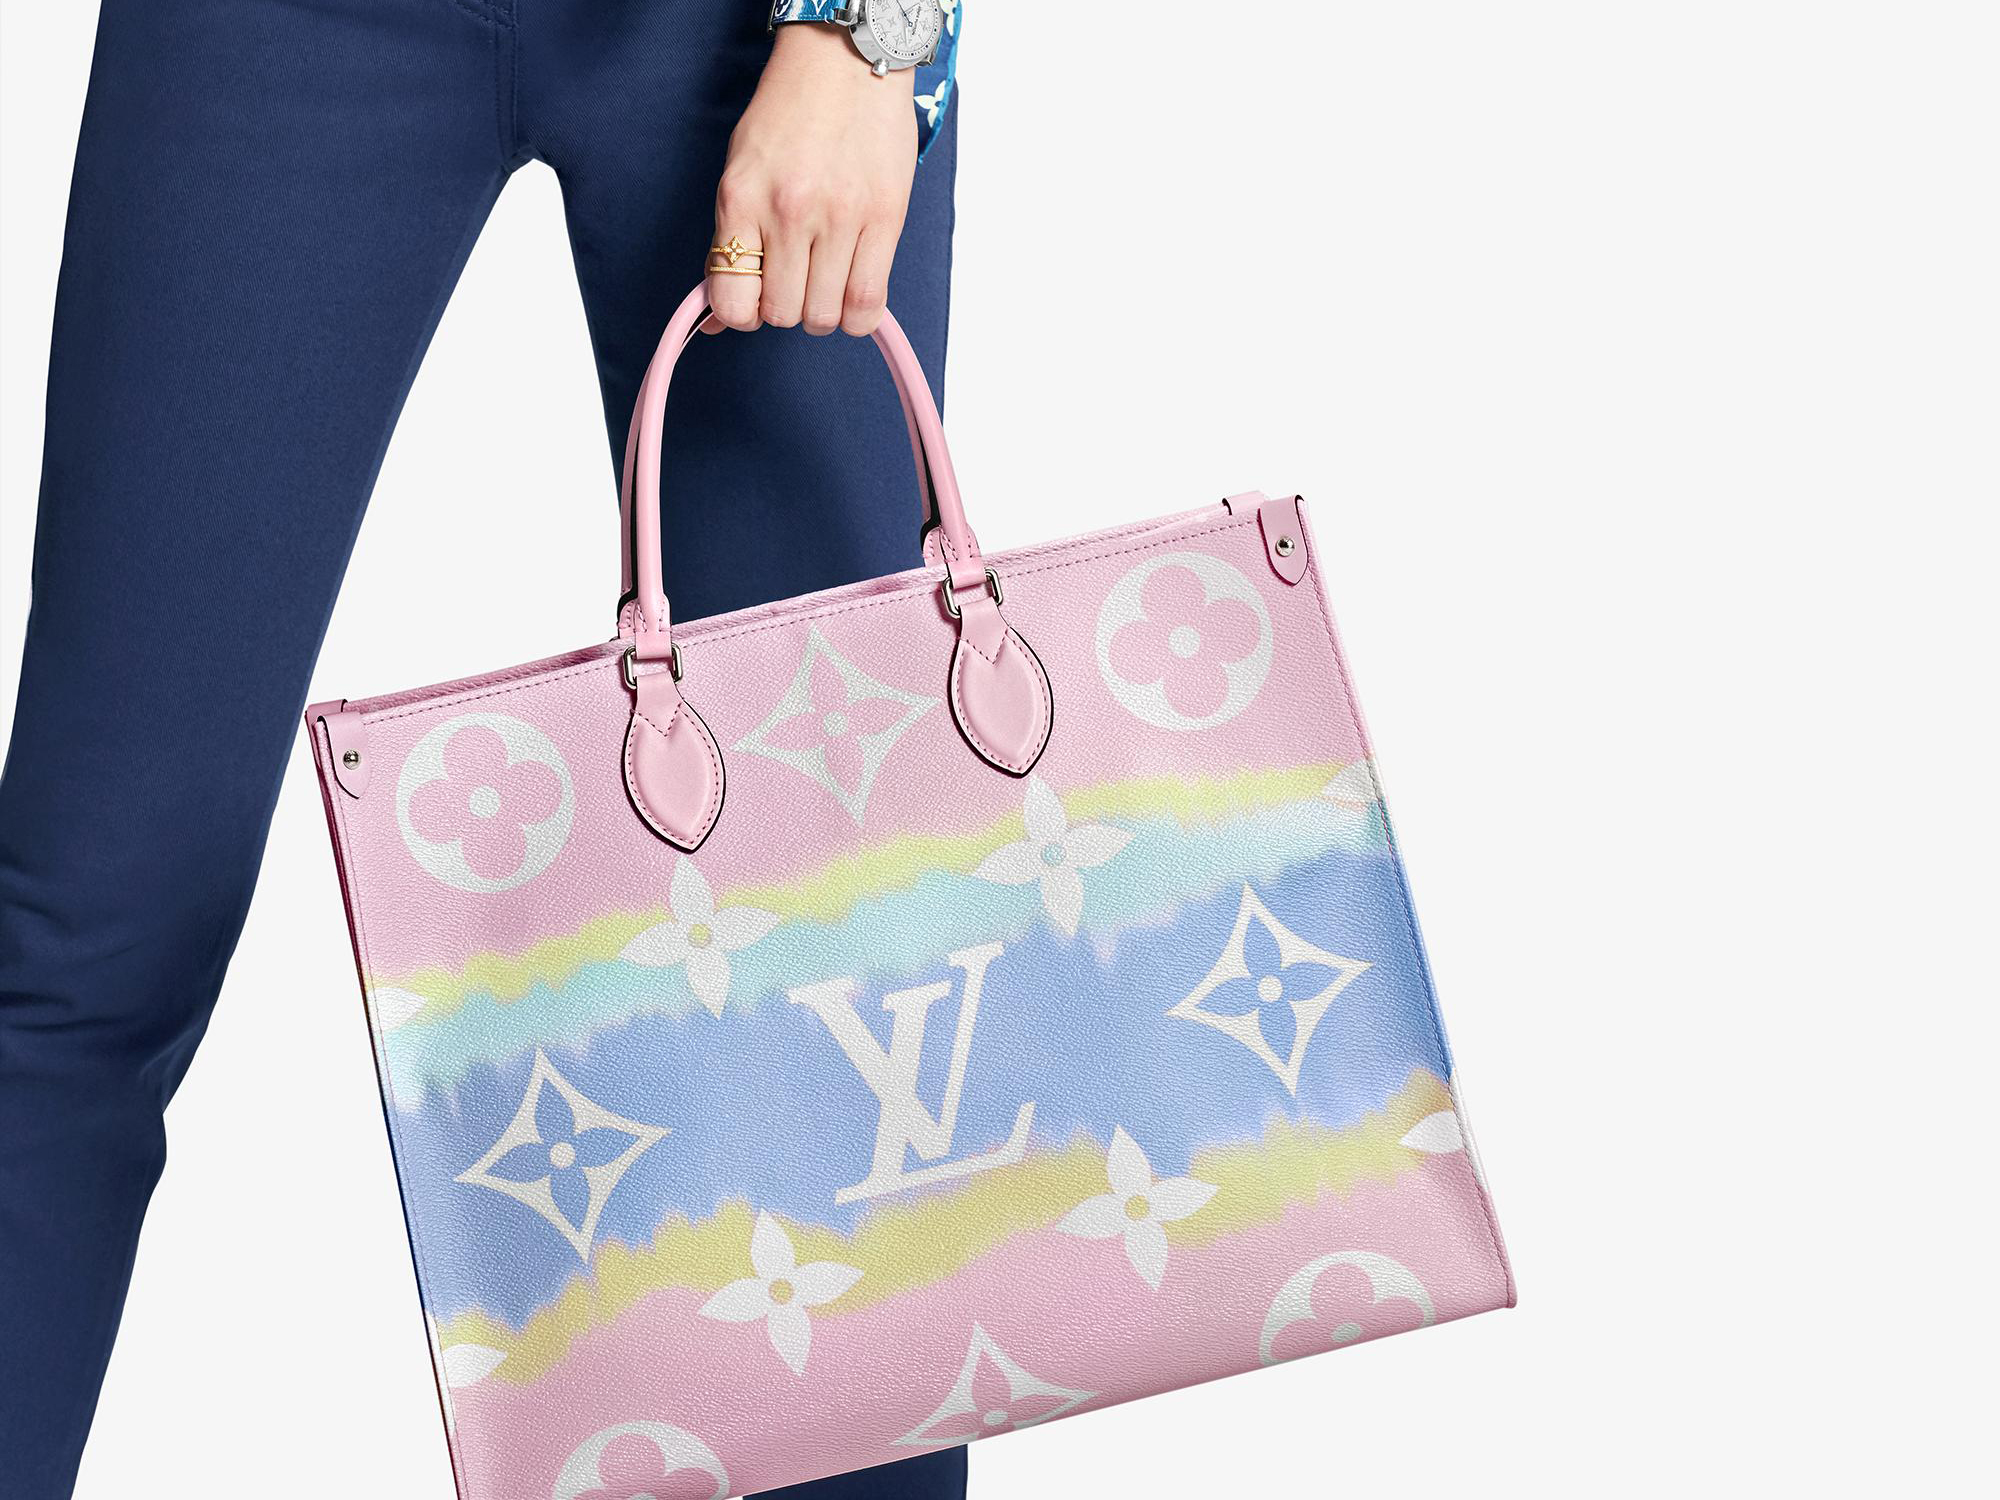 So Cantik, 8 Beg Louis Vuitton Yang Ini Paling Popular!